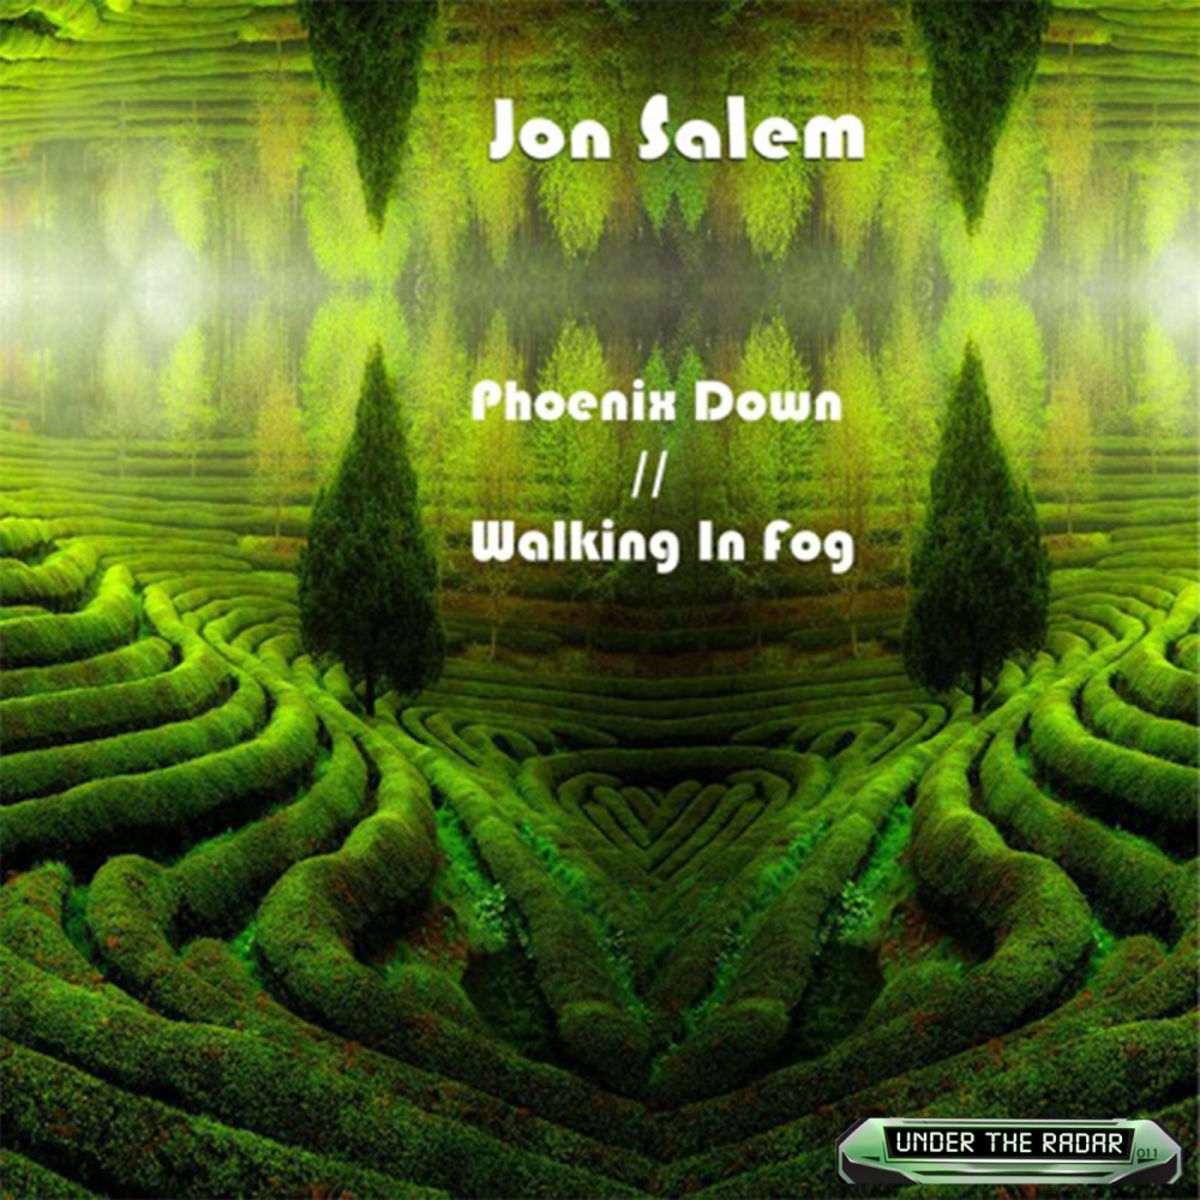 Jon Salem - Phoenix Down / Walking In Fog / Under The Radar